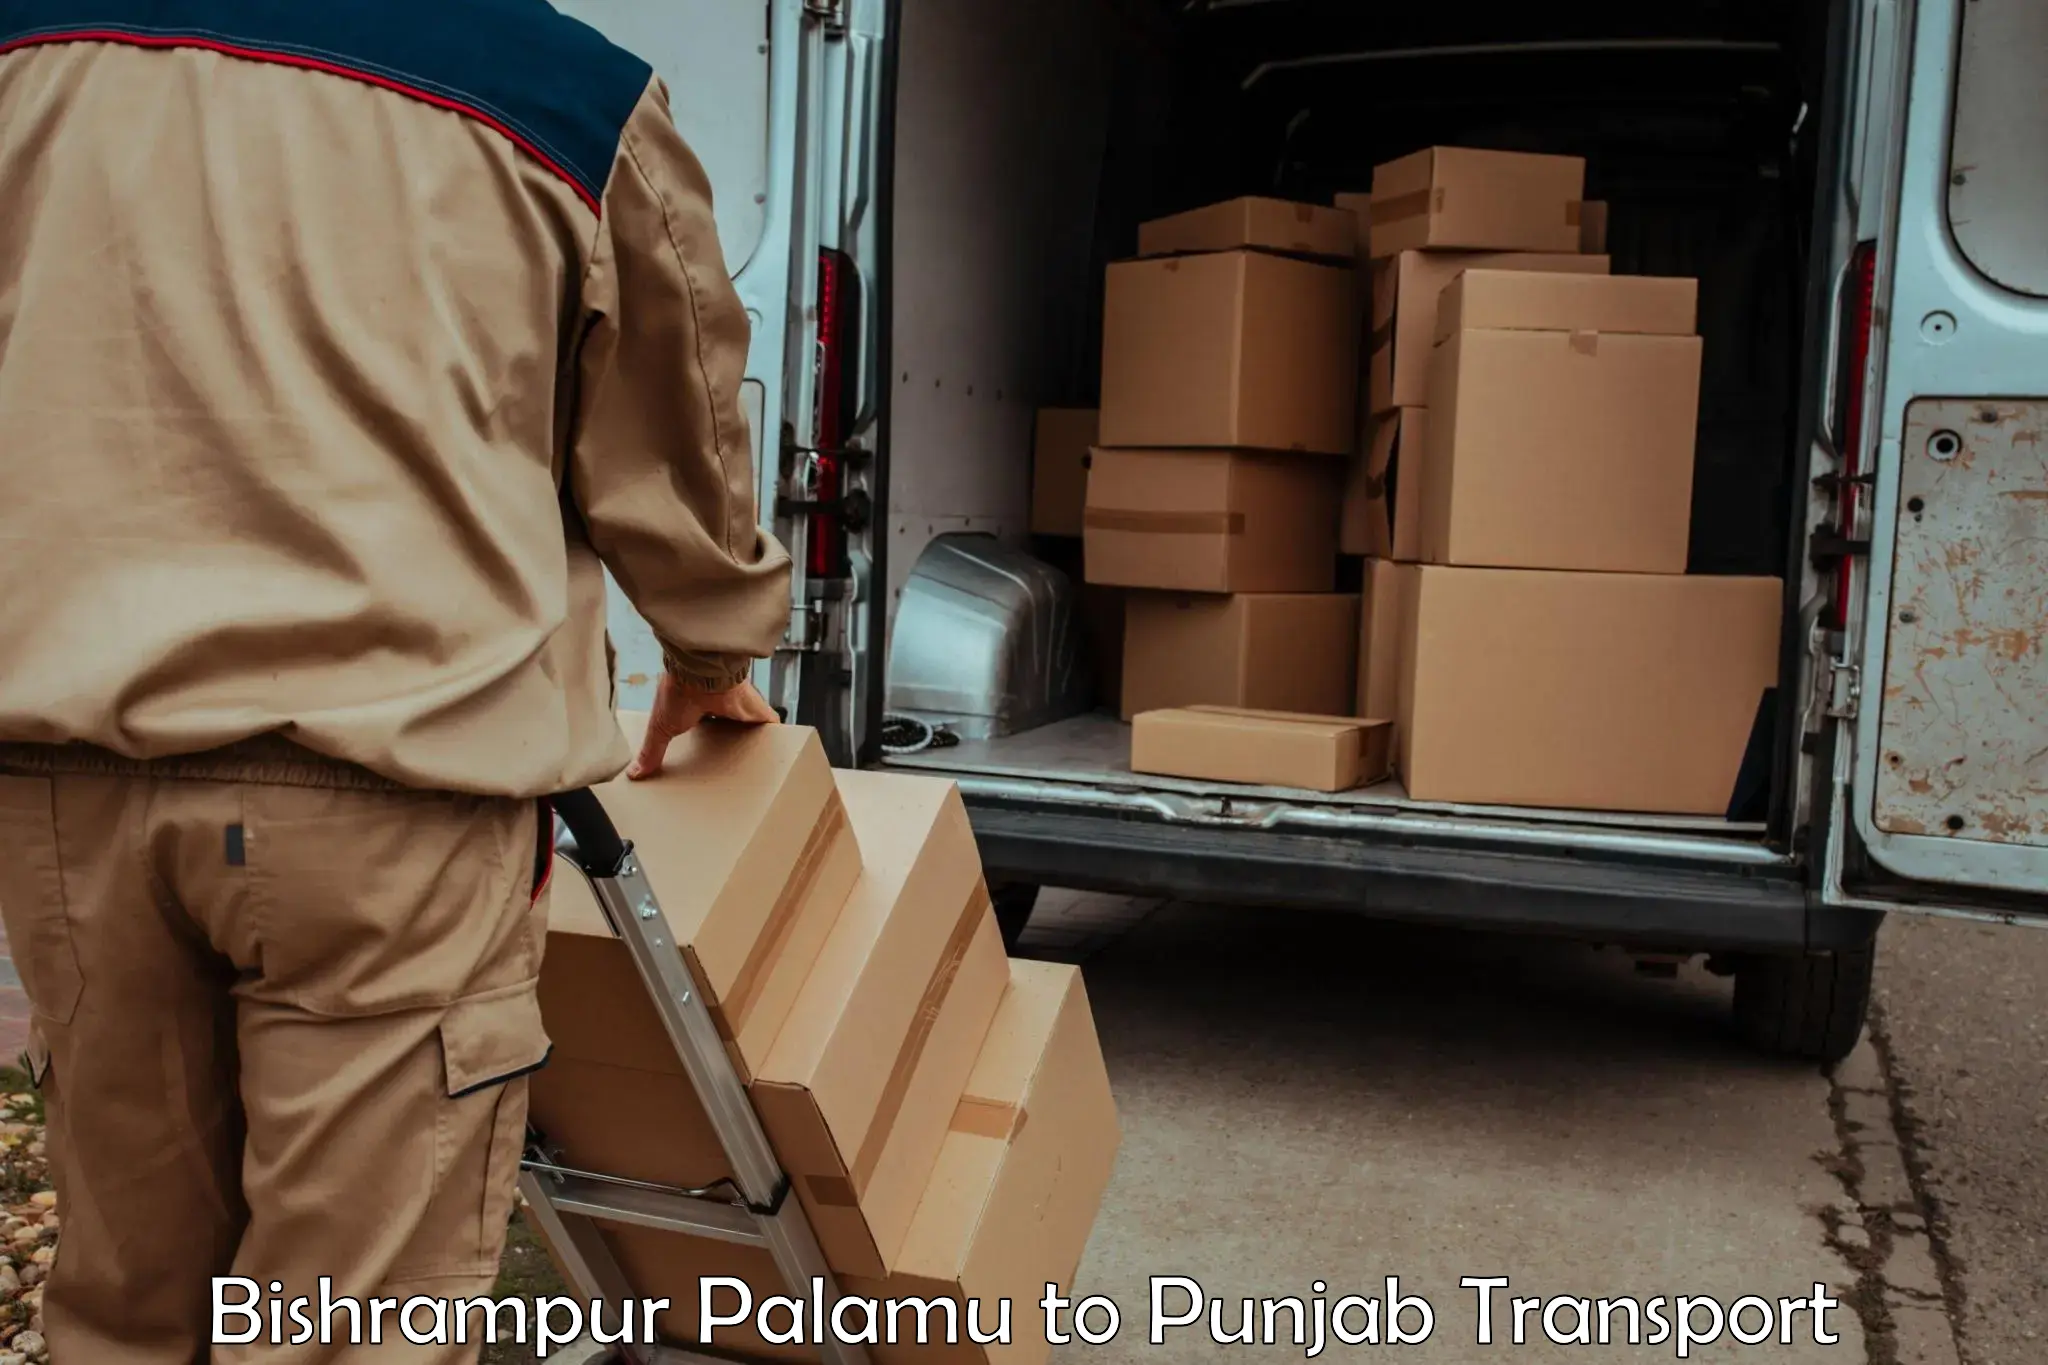 Goods delivery service Bishrampur Palamu to Zirakpur